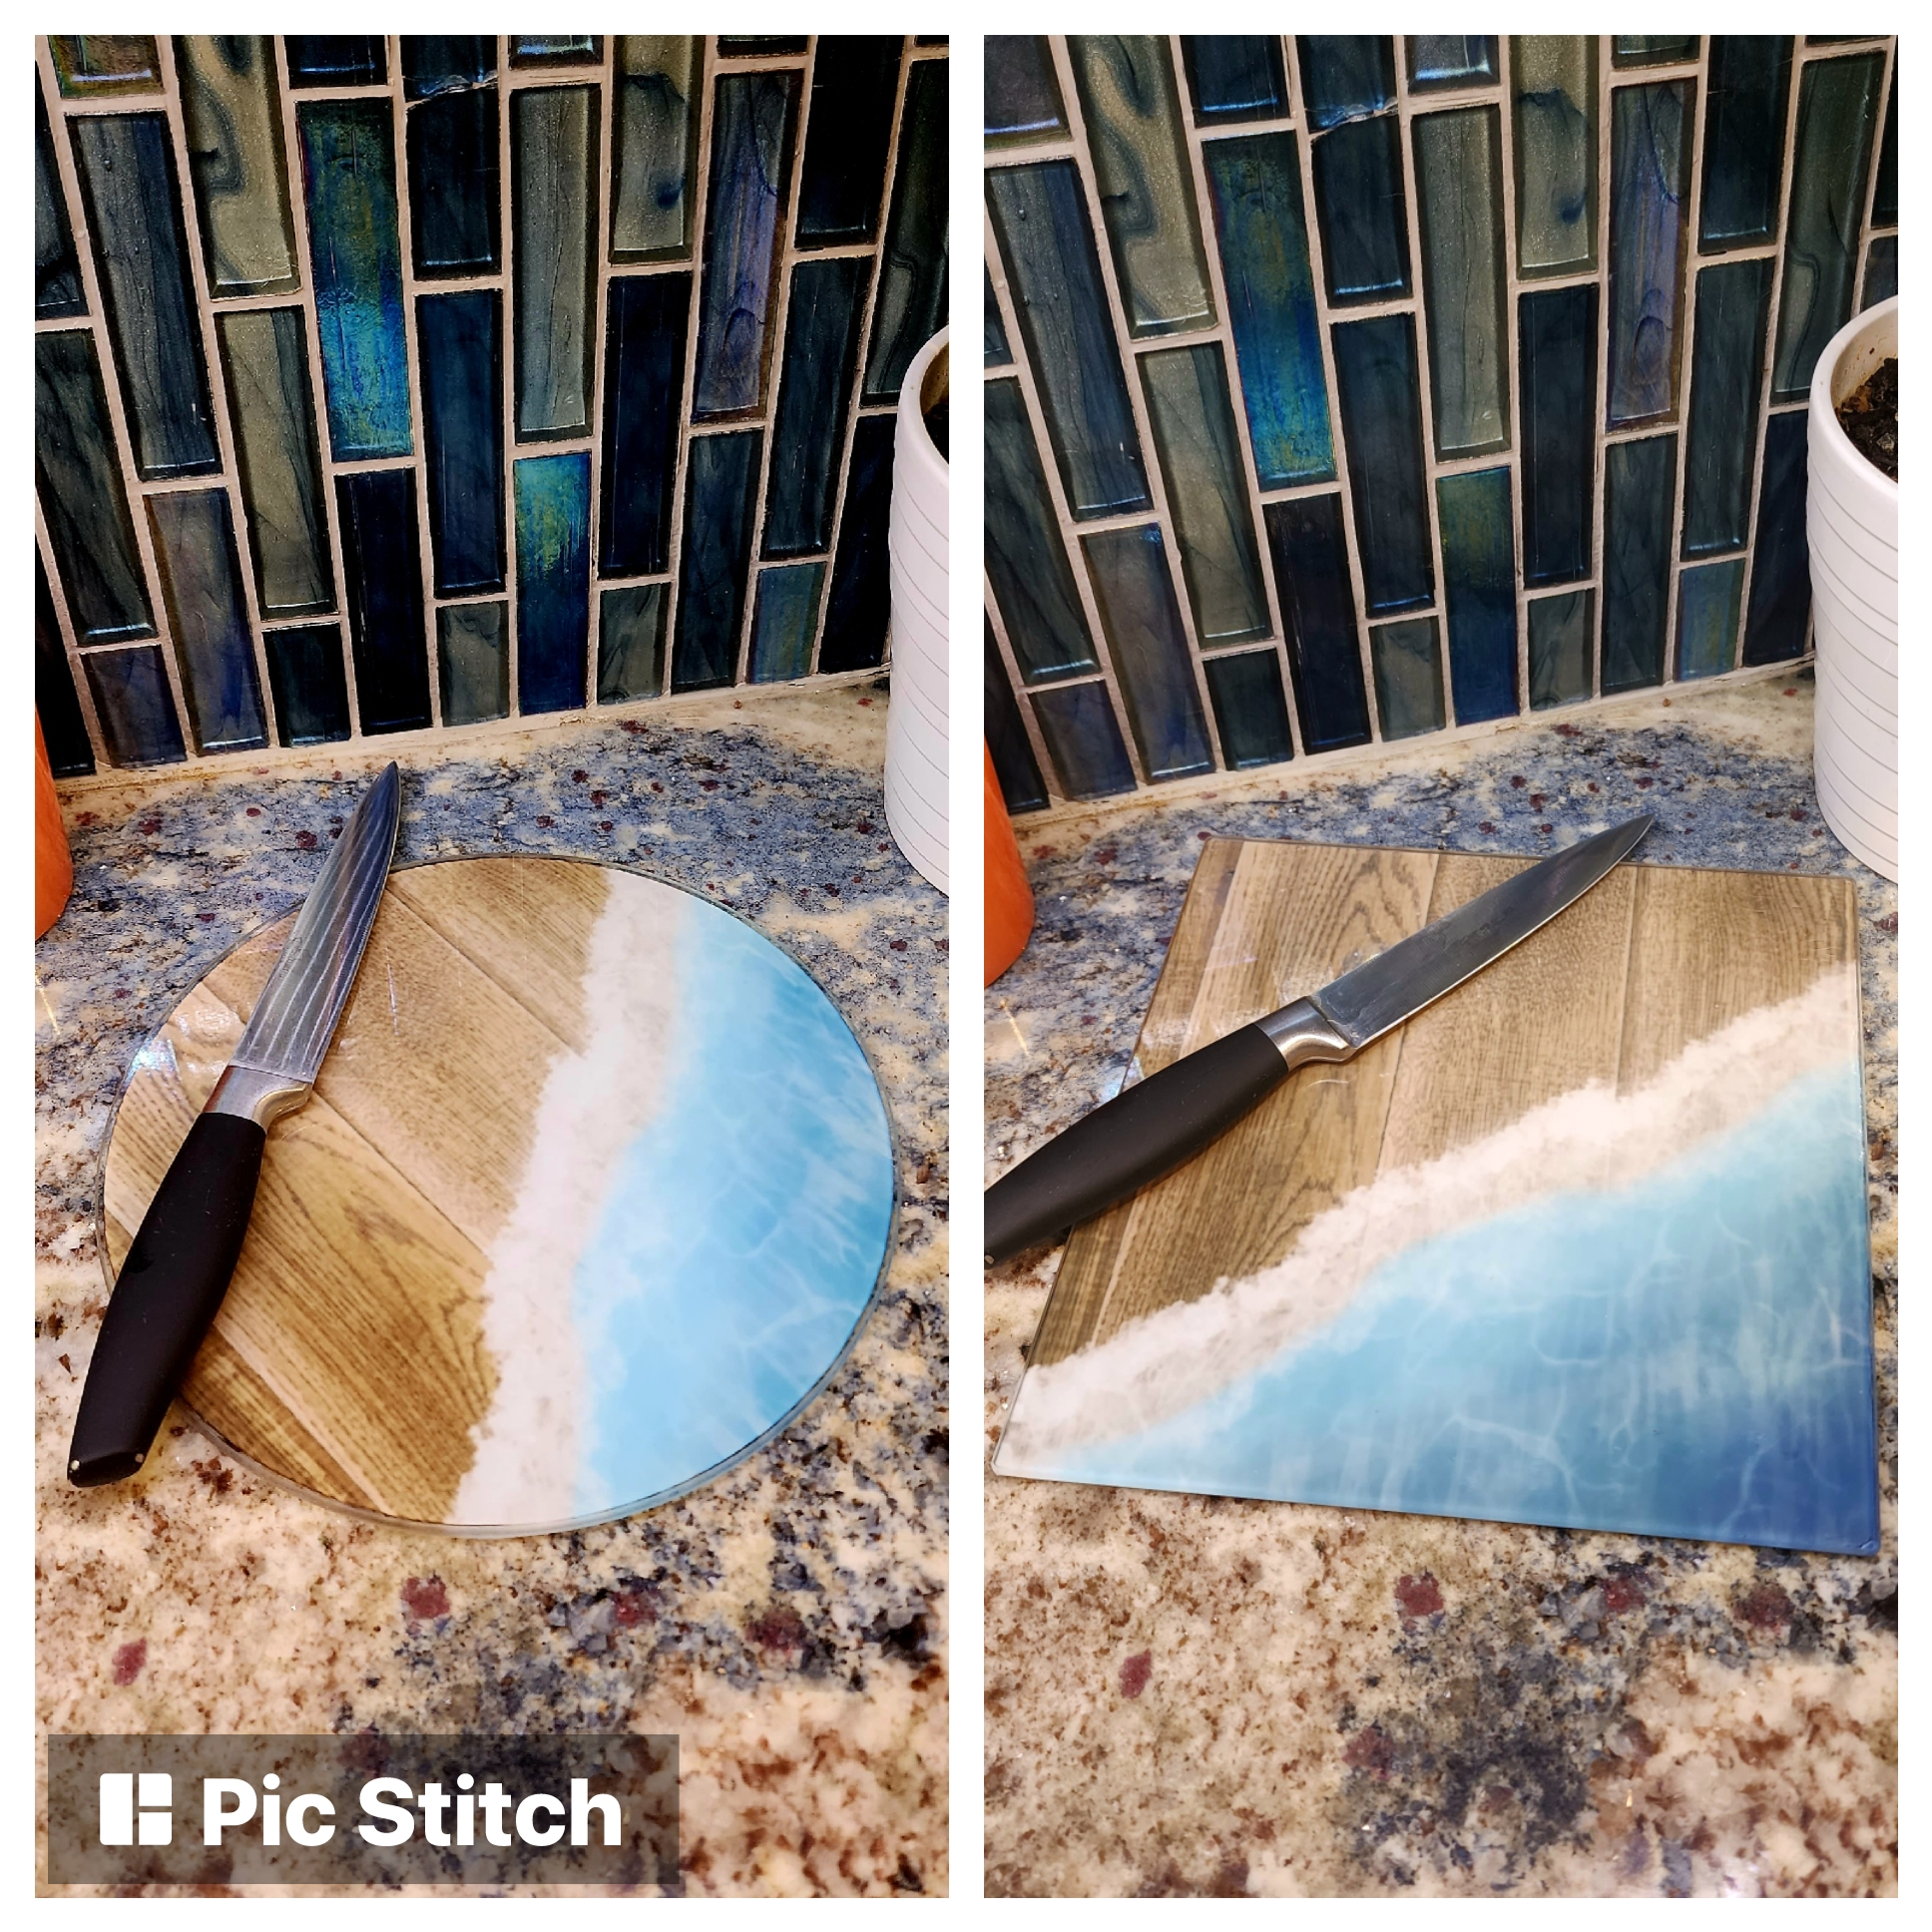 Sea Waves Beach Themed Glass Cutting Boards